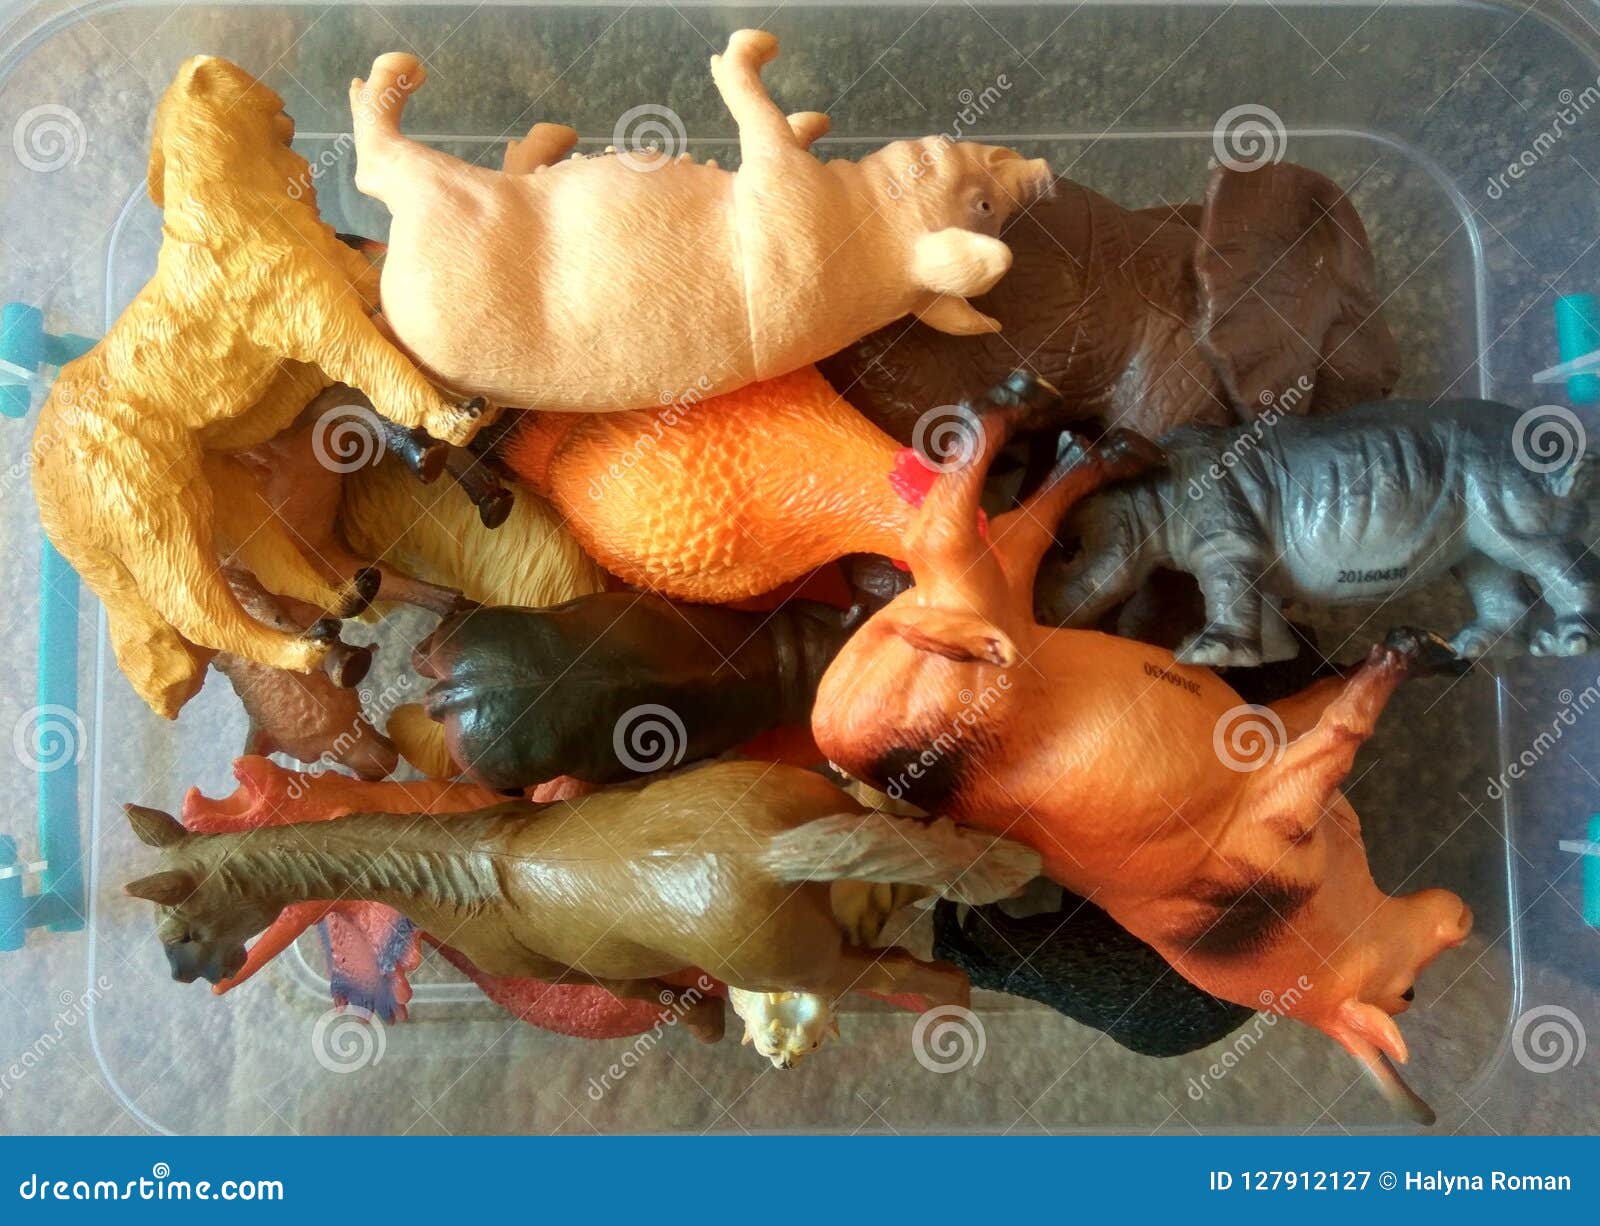 Box Full of Plastic Animal Toys Stock Image - Image of plastic, models:  127912127